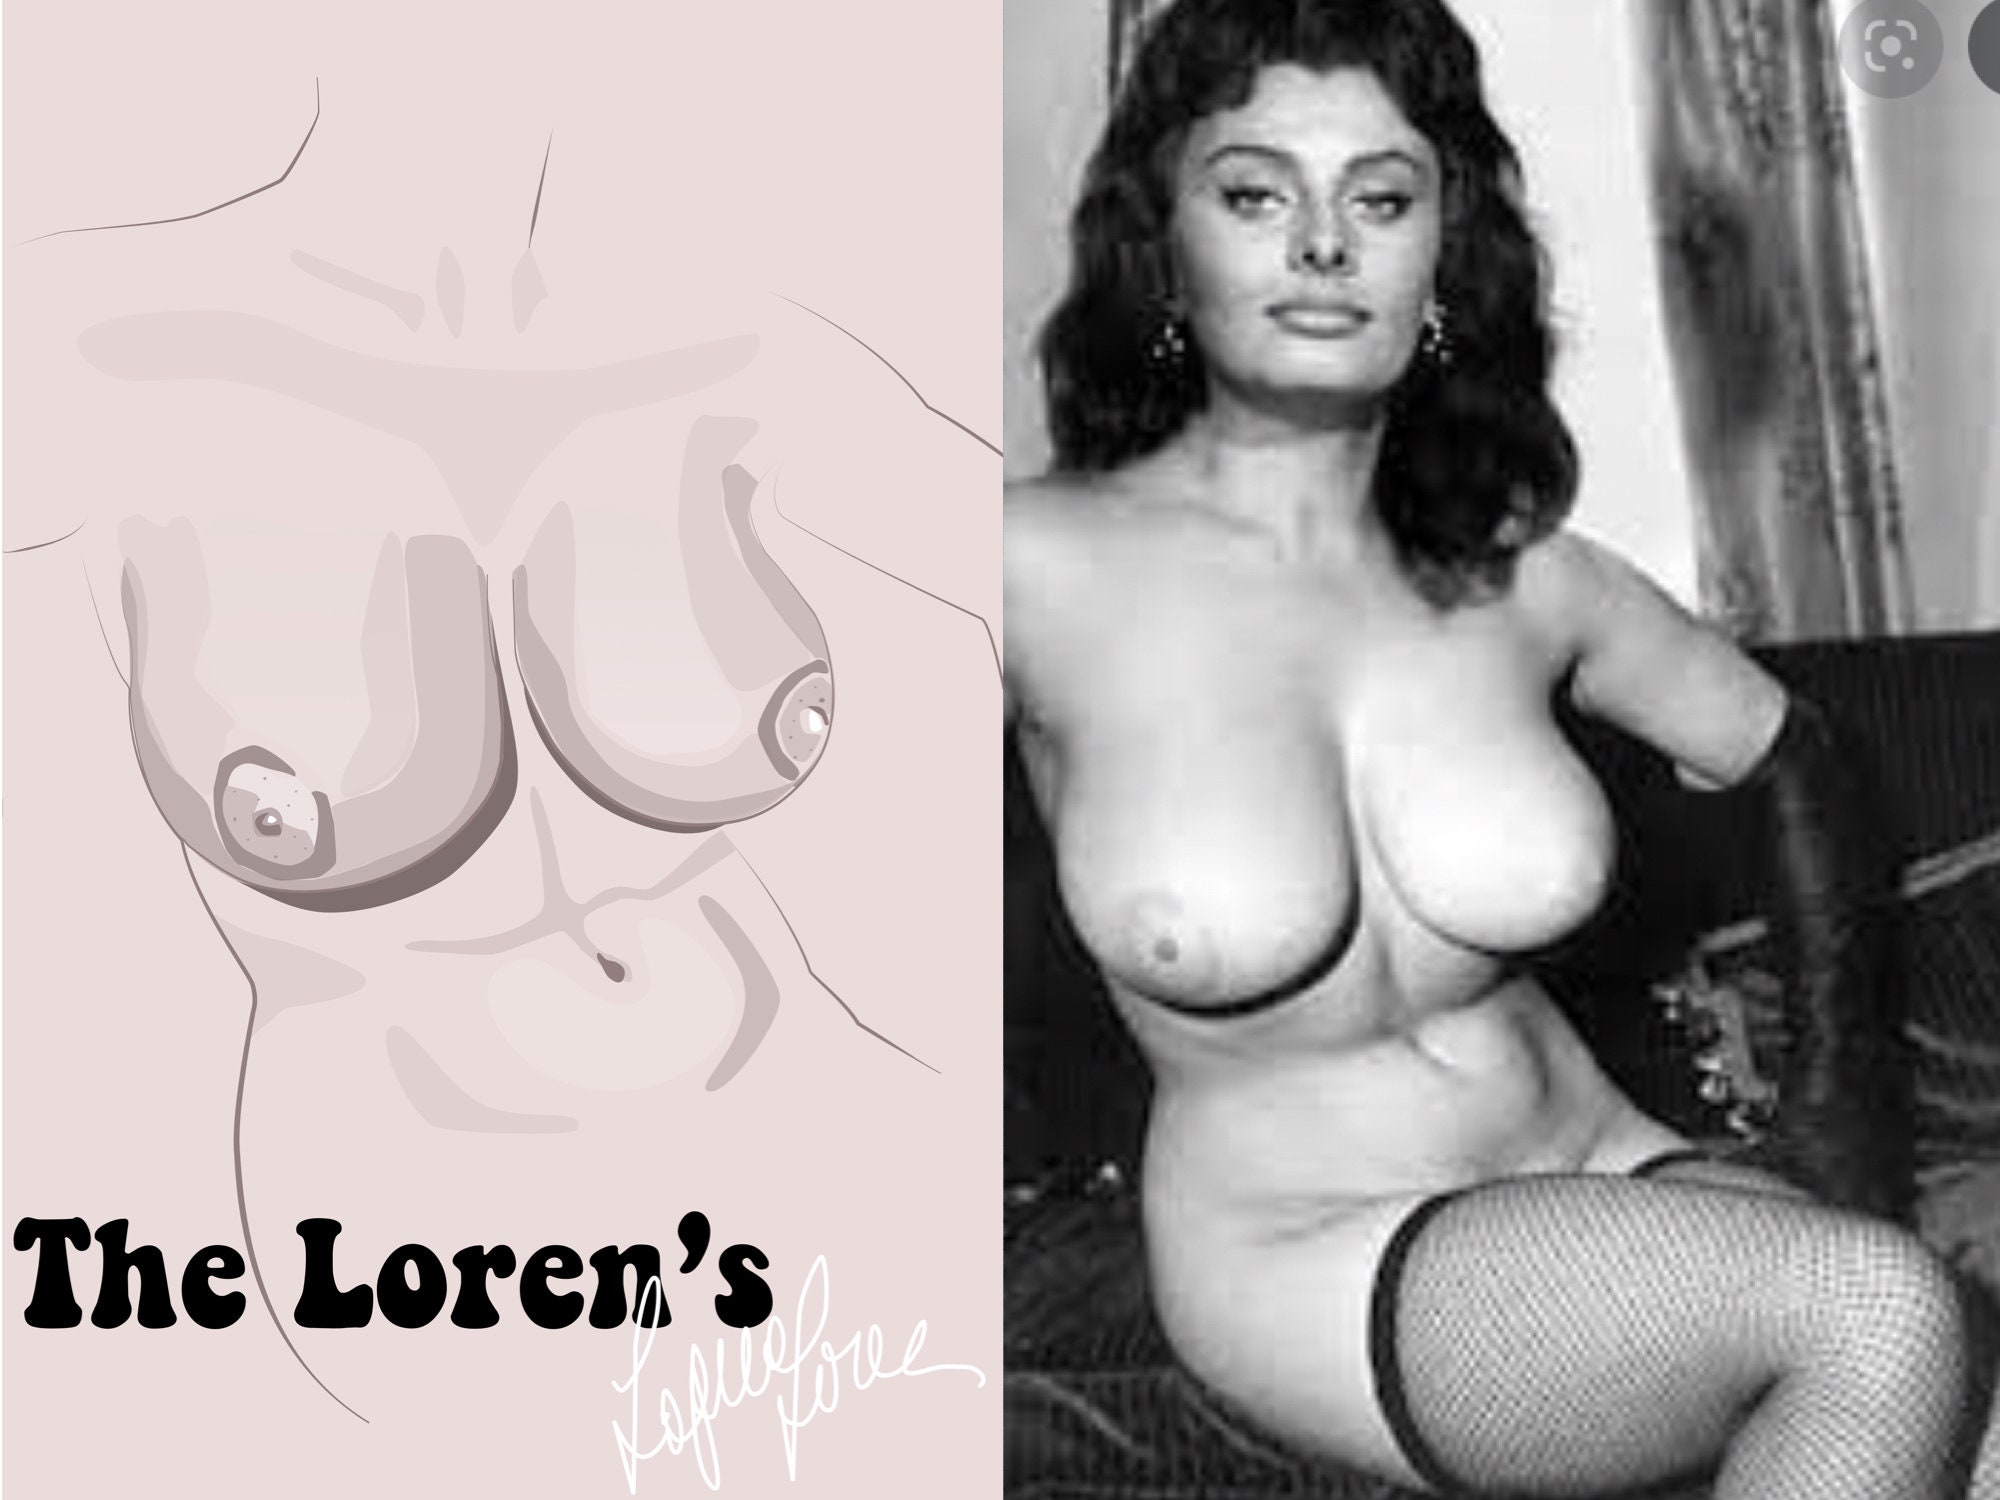 alain roussel share sophia loren naked photos photos